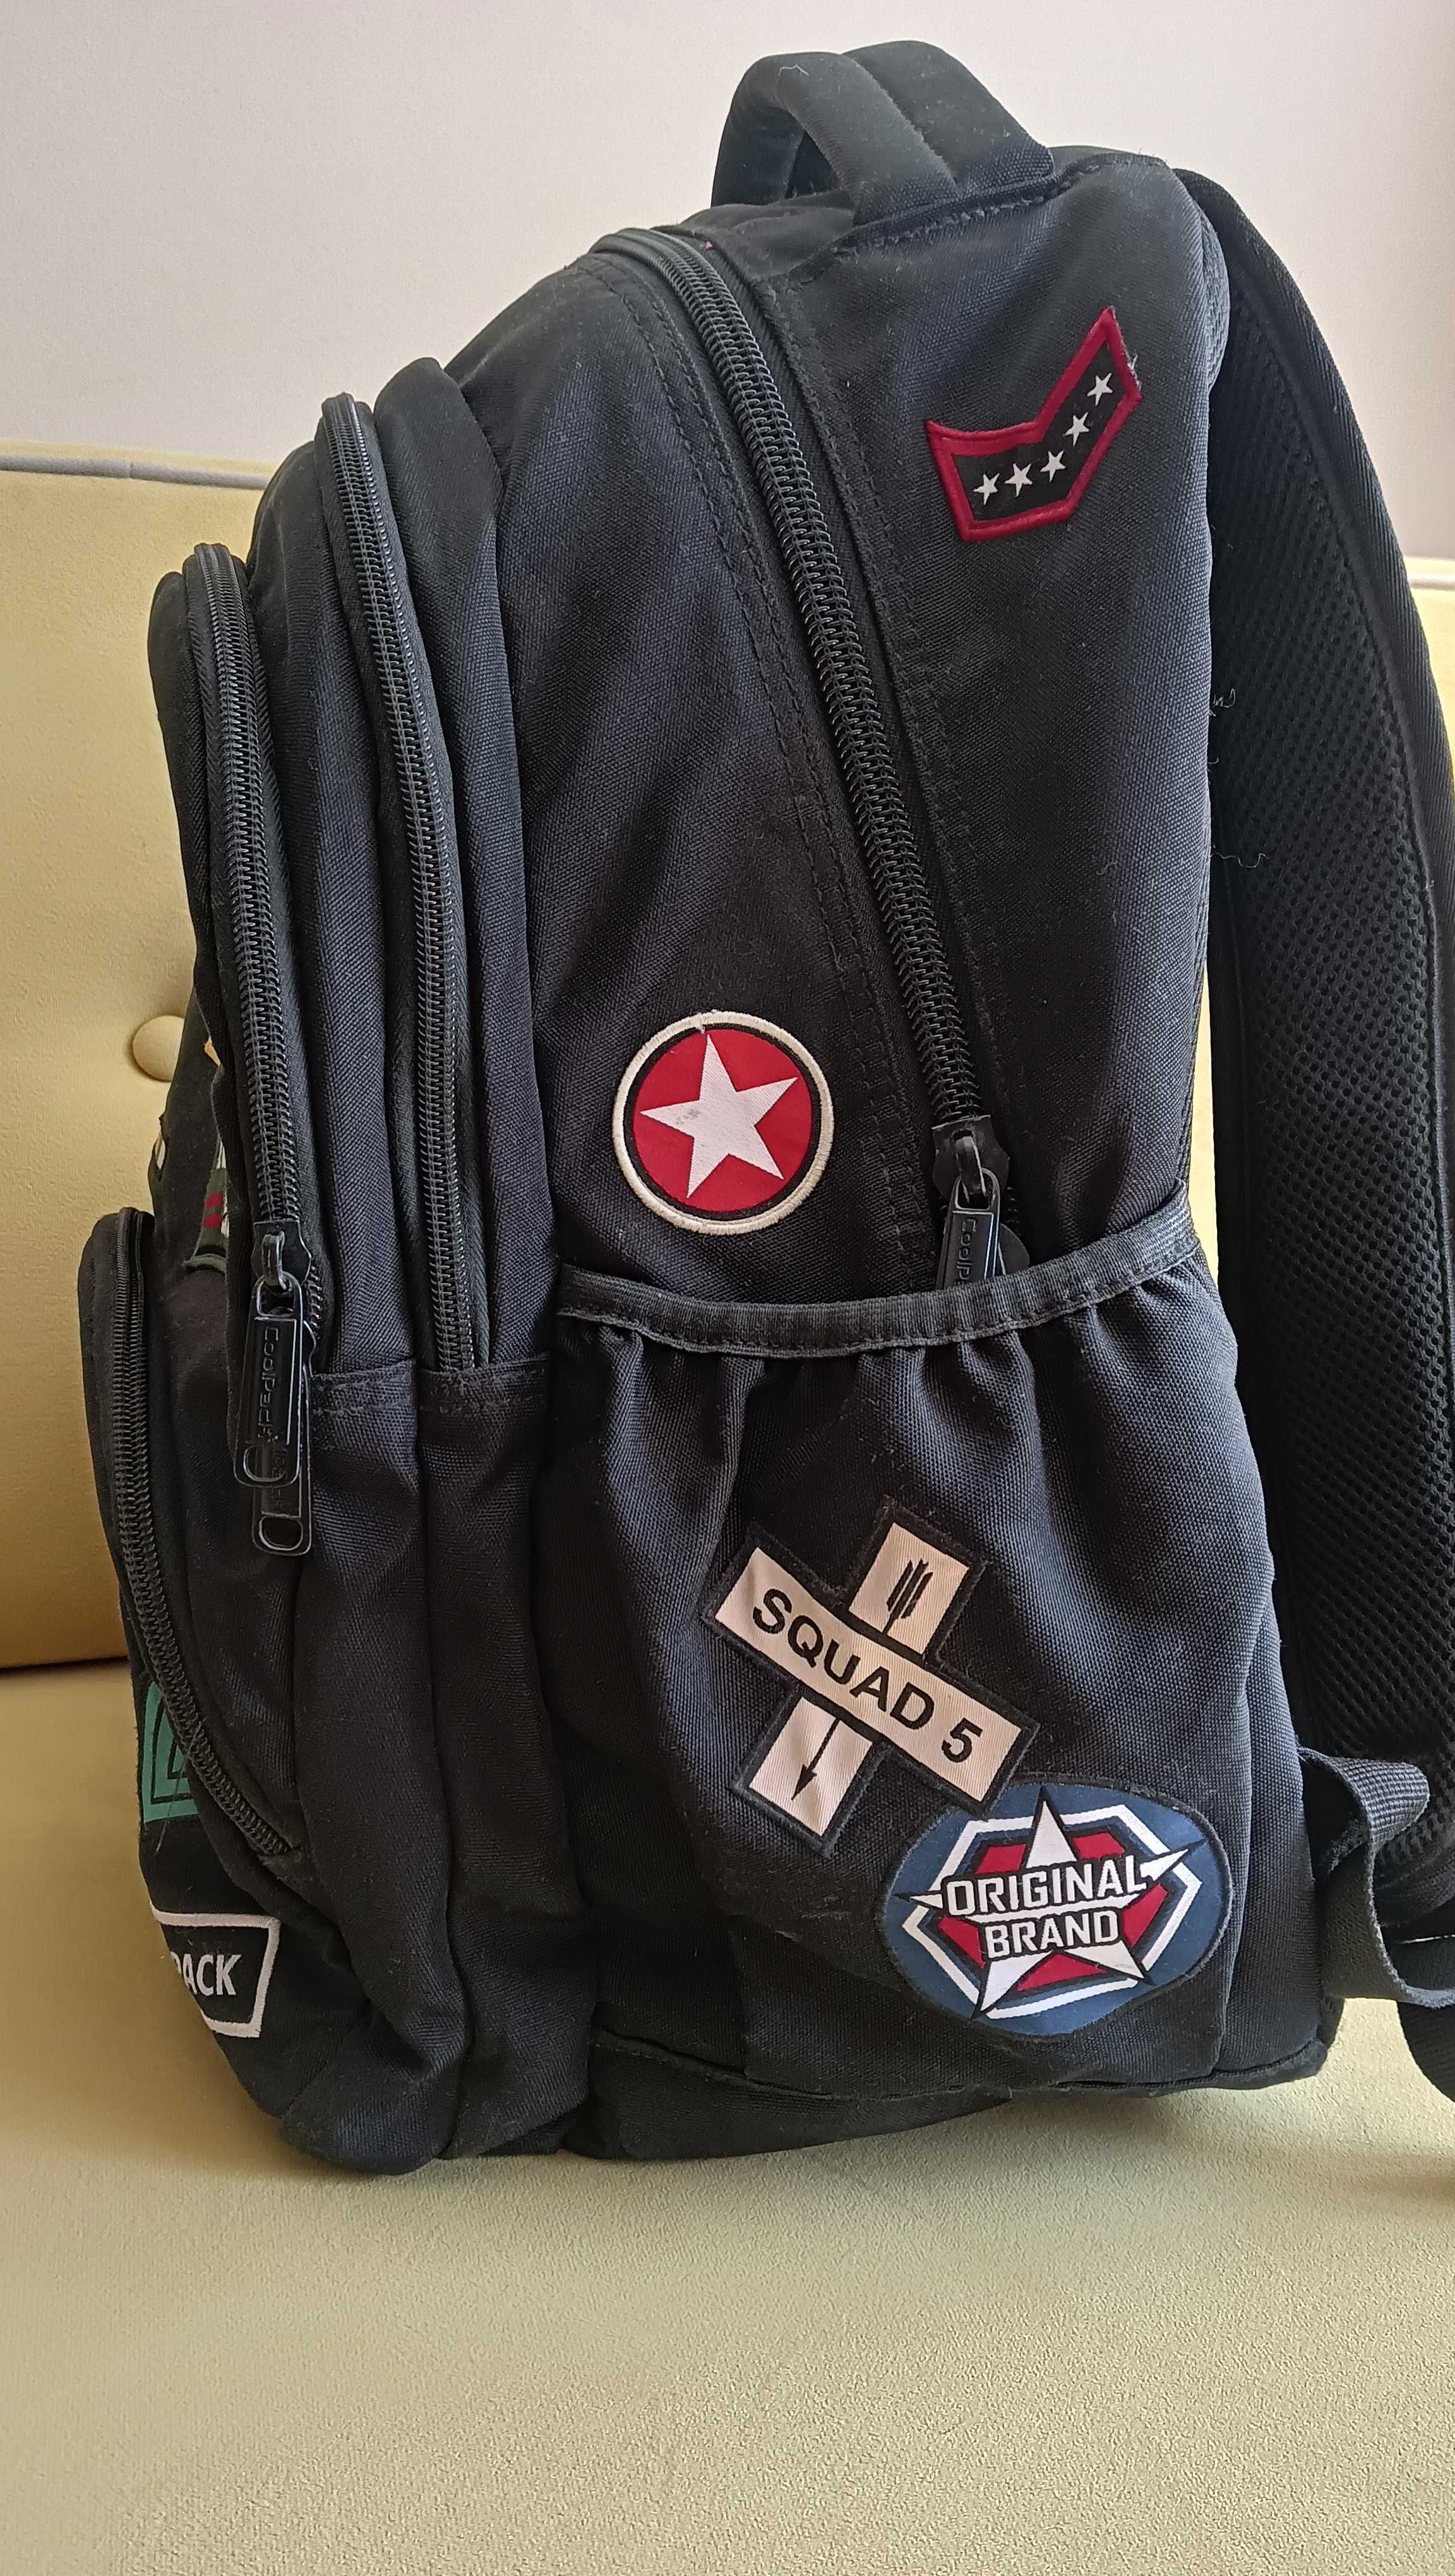 plecak Coolpack jak nowy